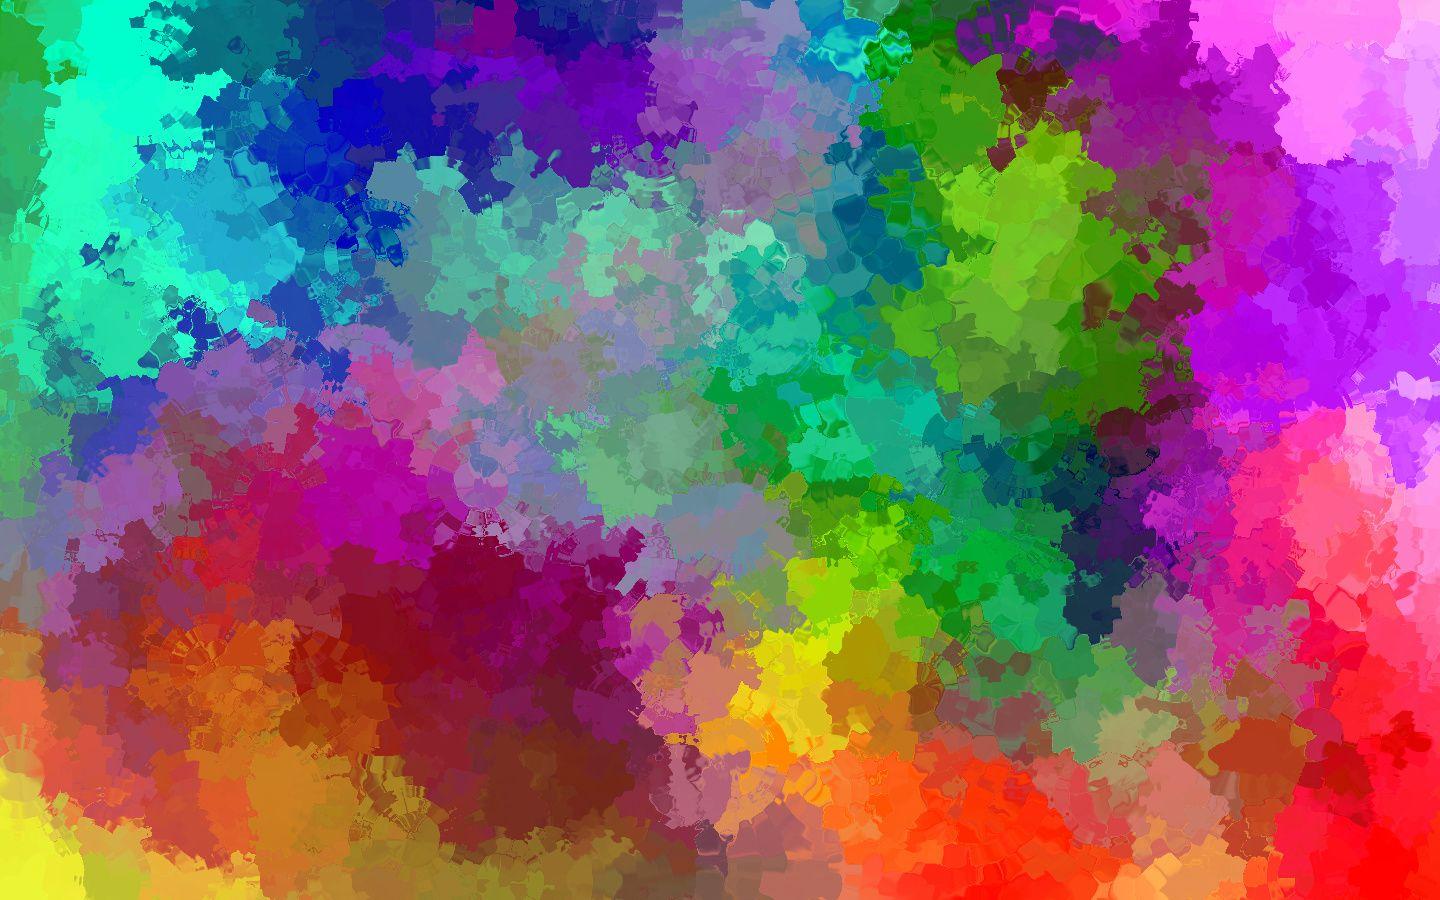 V.9.6 722.6 Kbyte, The explosion of color, pix: 1440x900